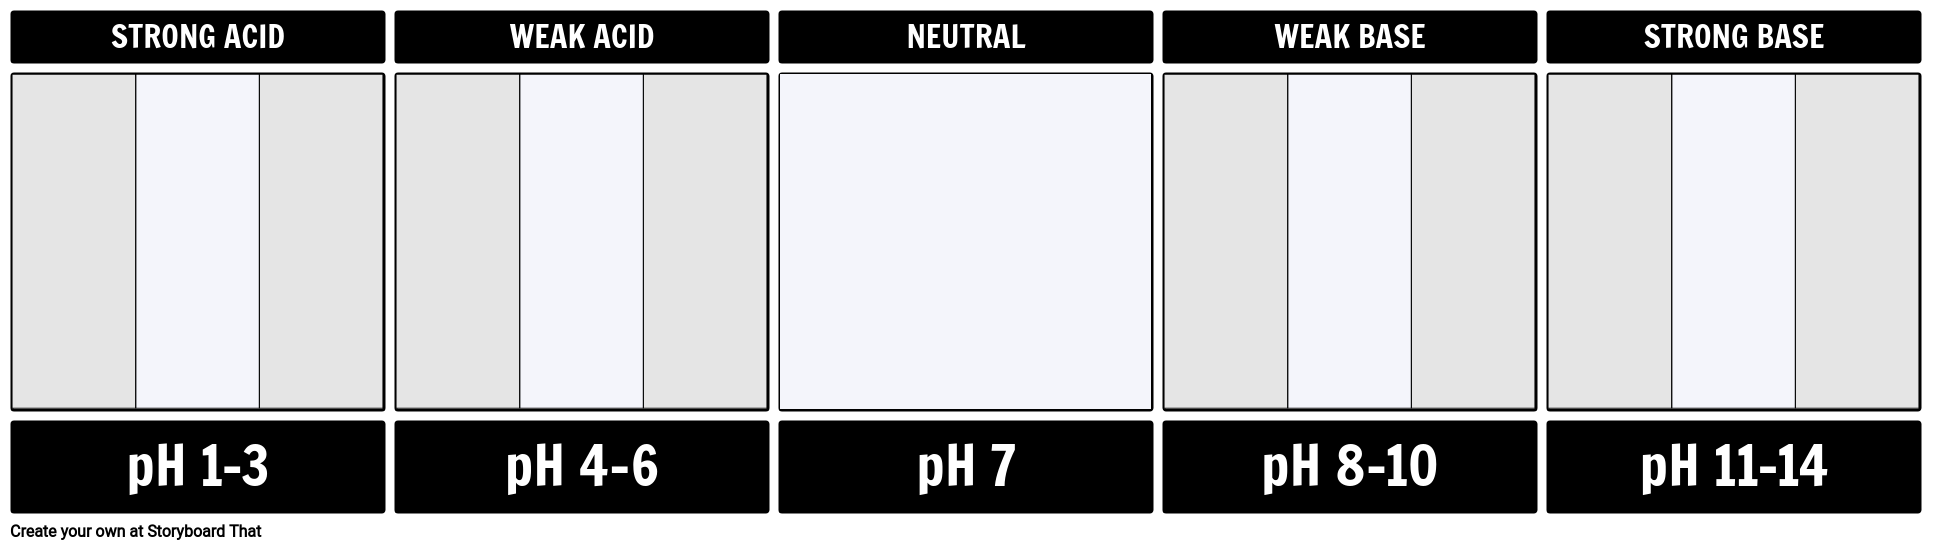 pH Scale Template